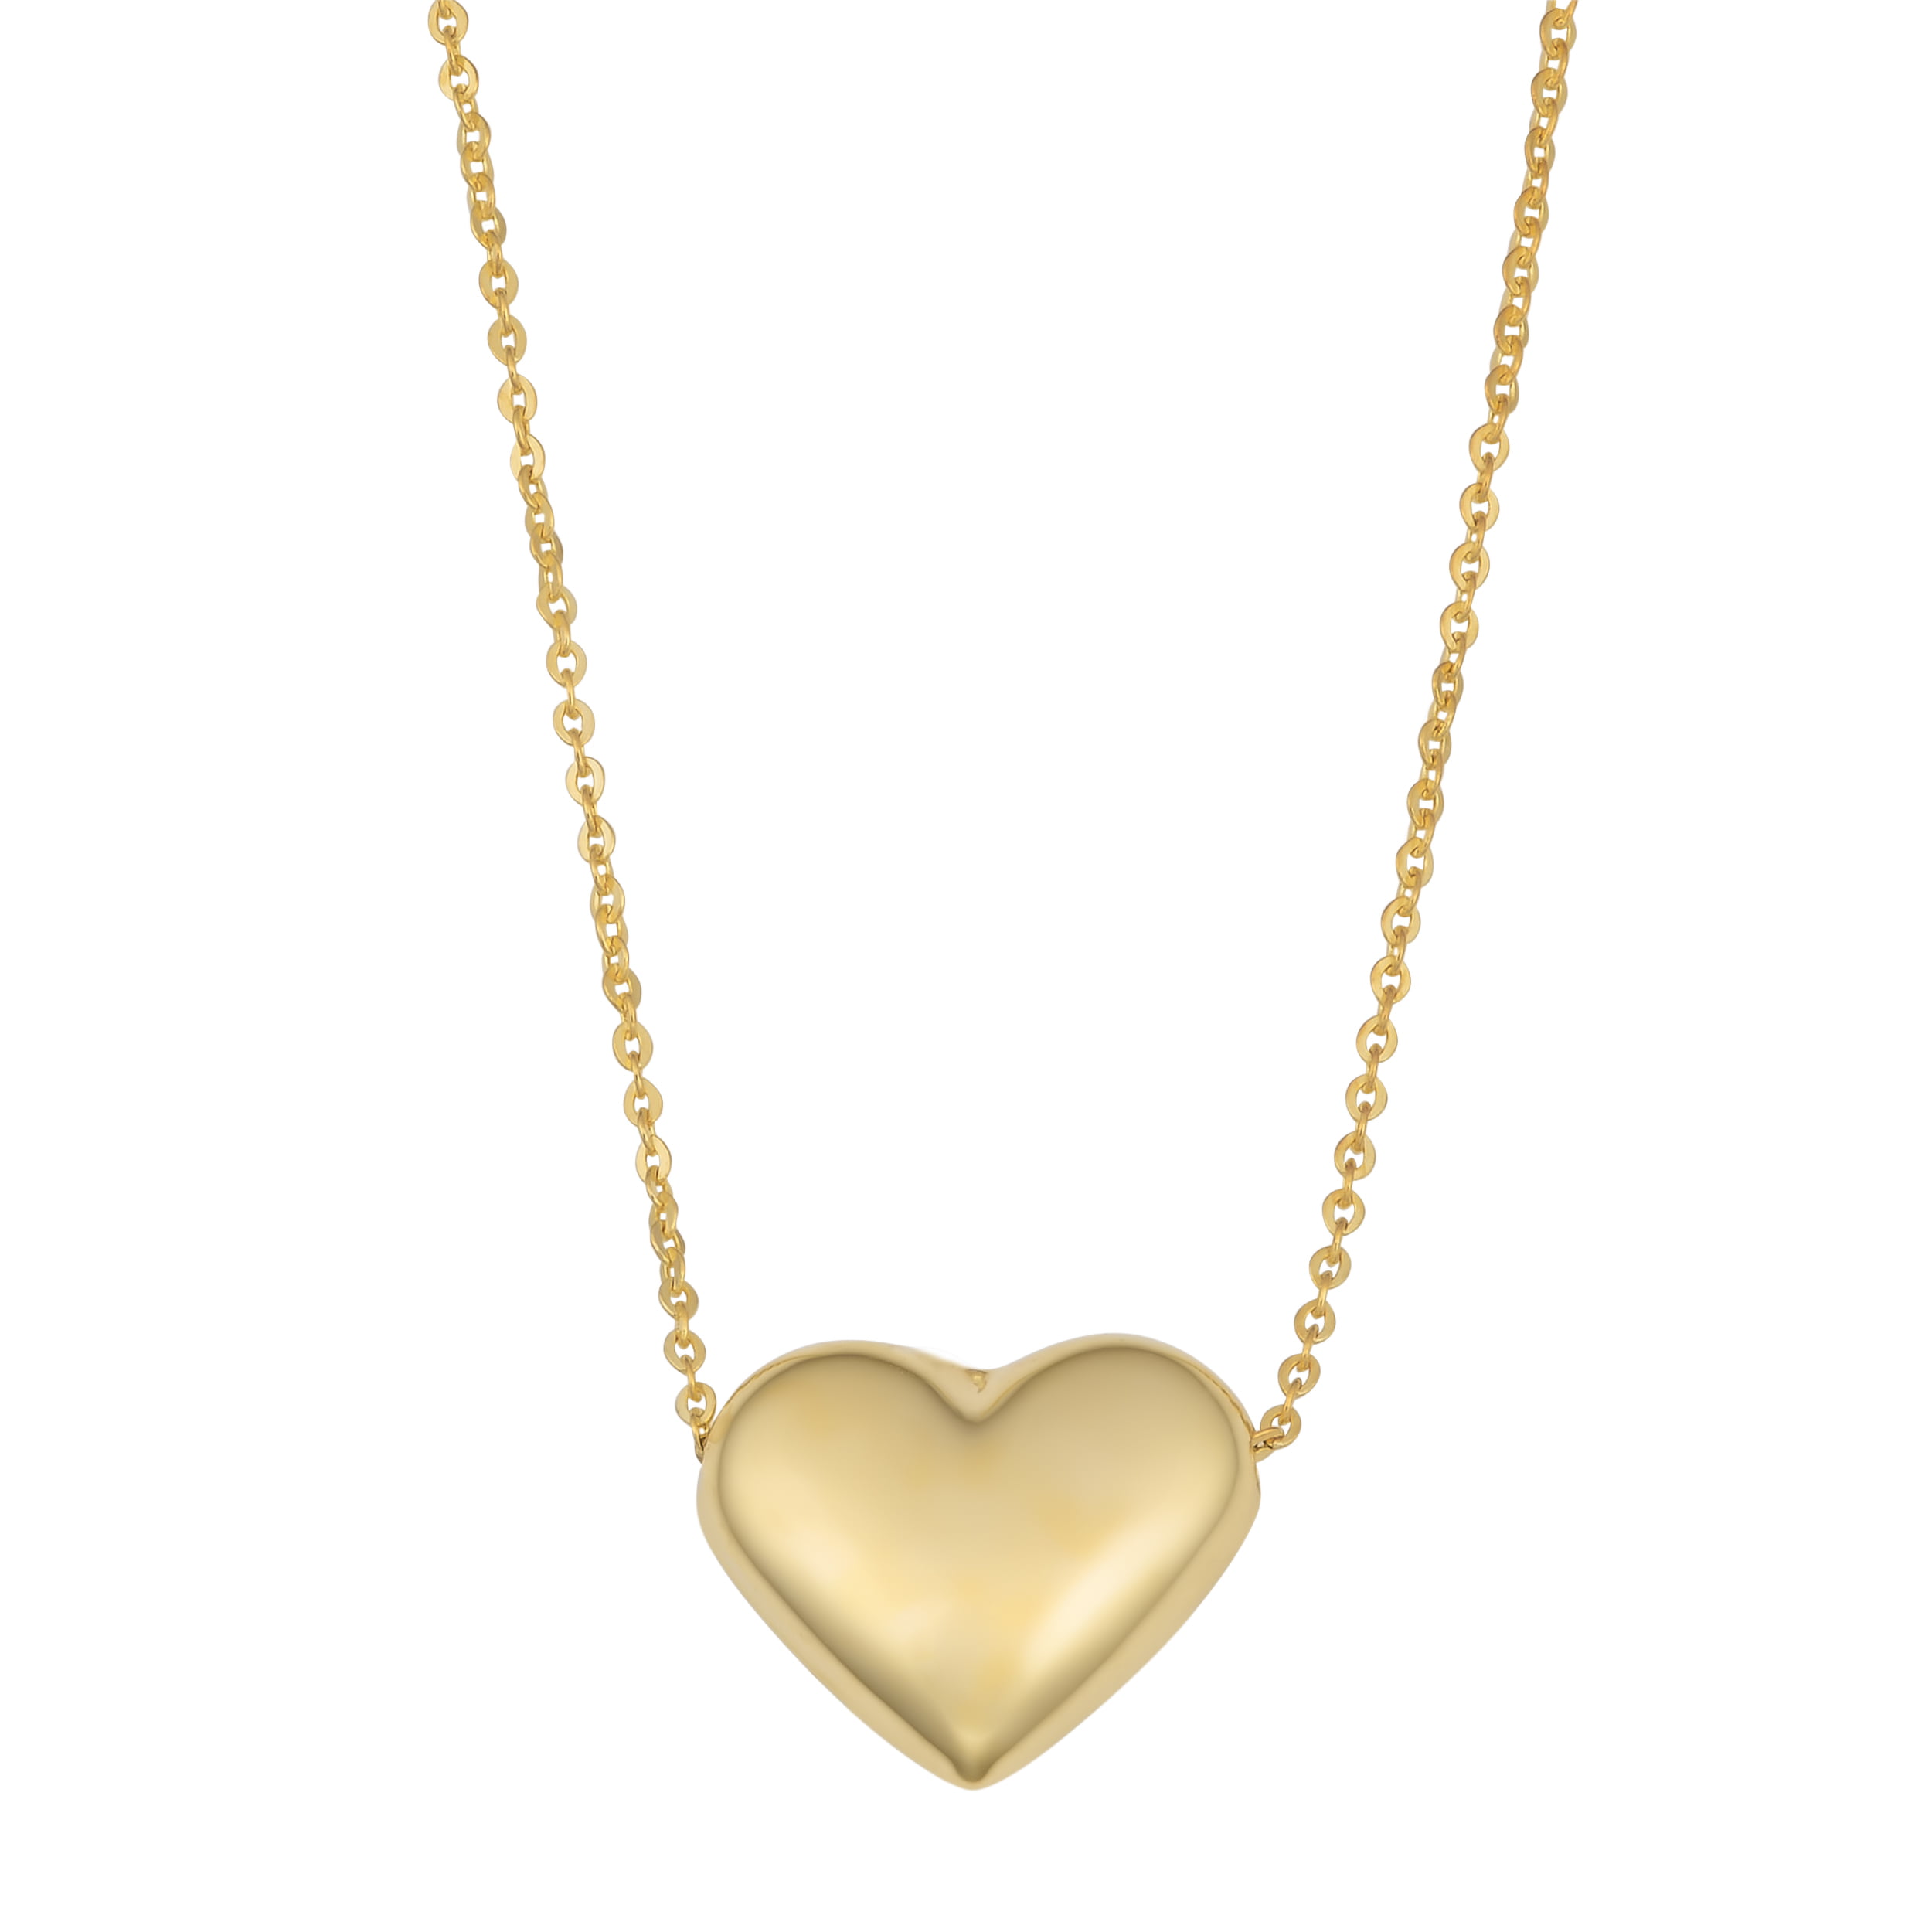 10K Yellow Gold Puffed Heart Pendant Necklace, 18" - Walmart.com